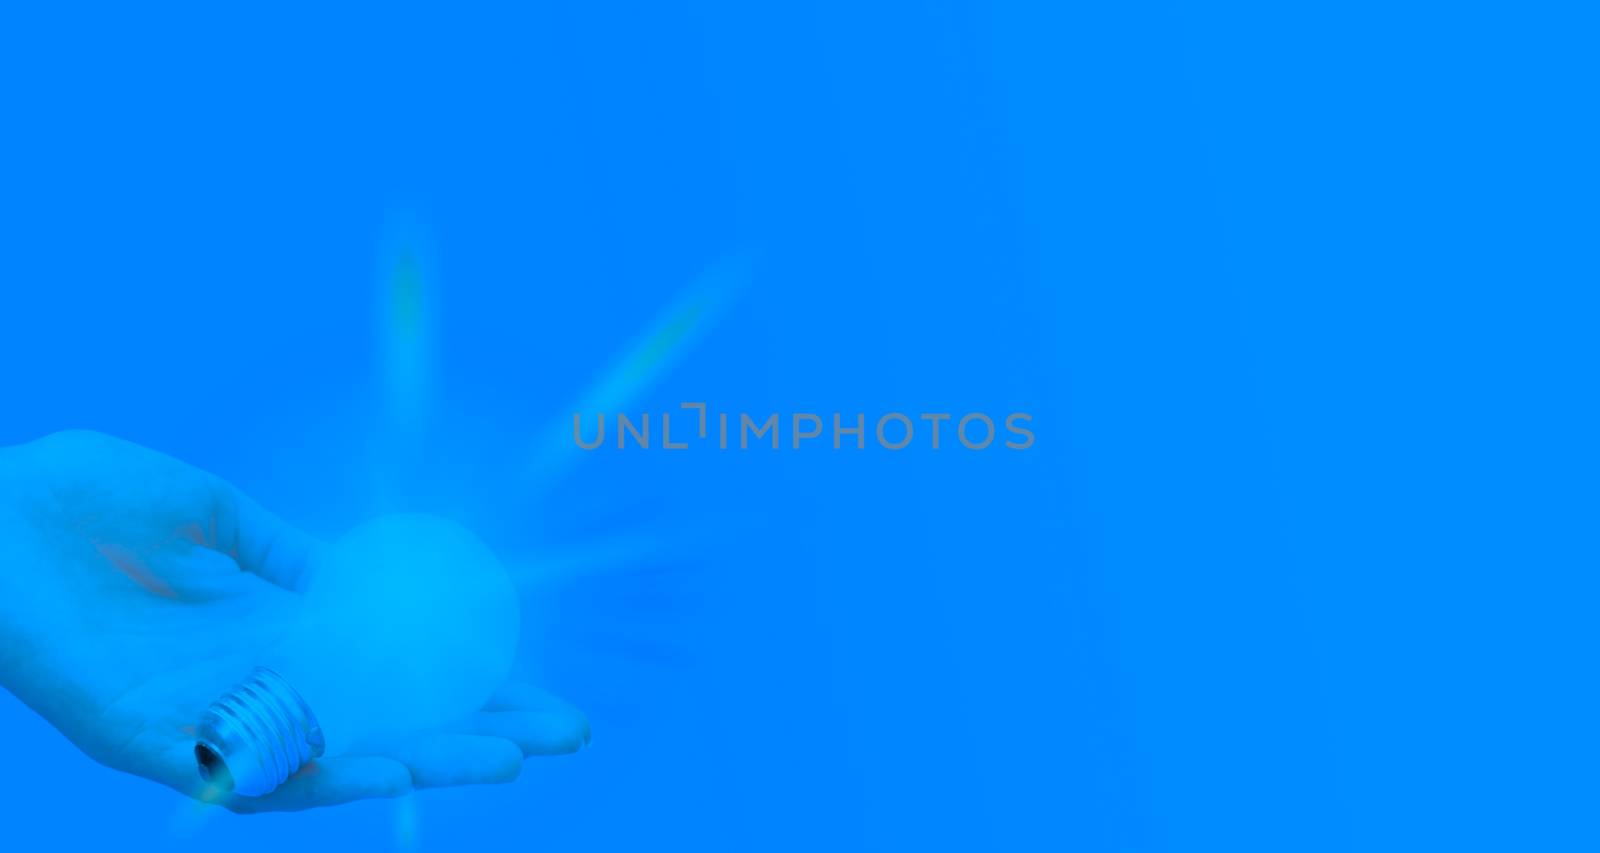 Background with lit lightbulb by arosoft